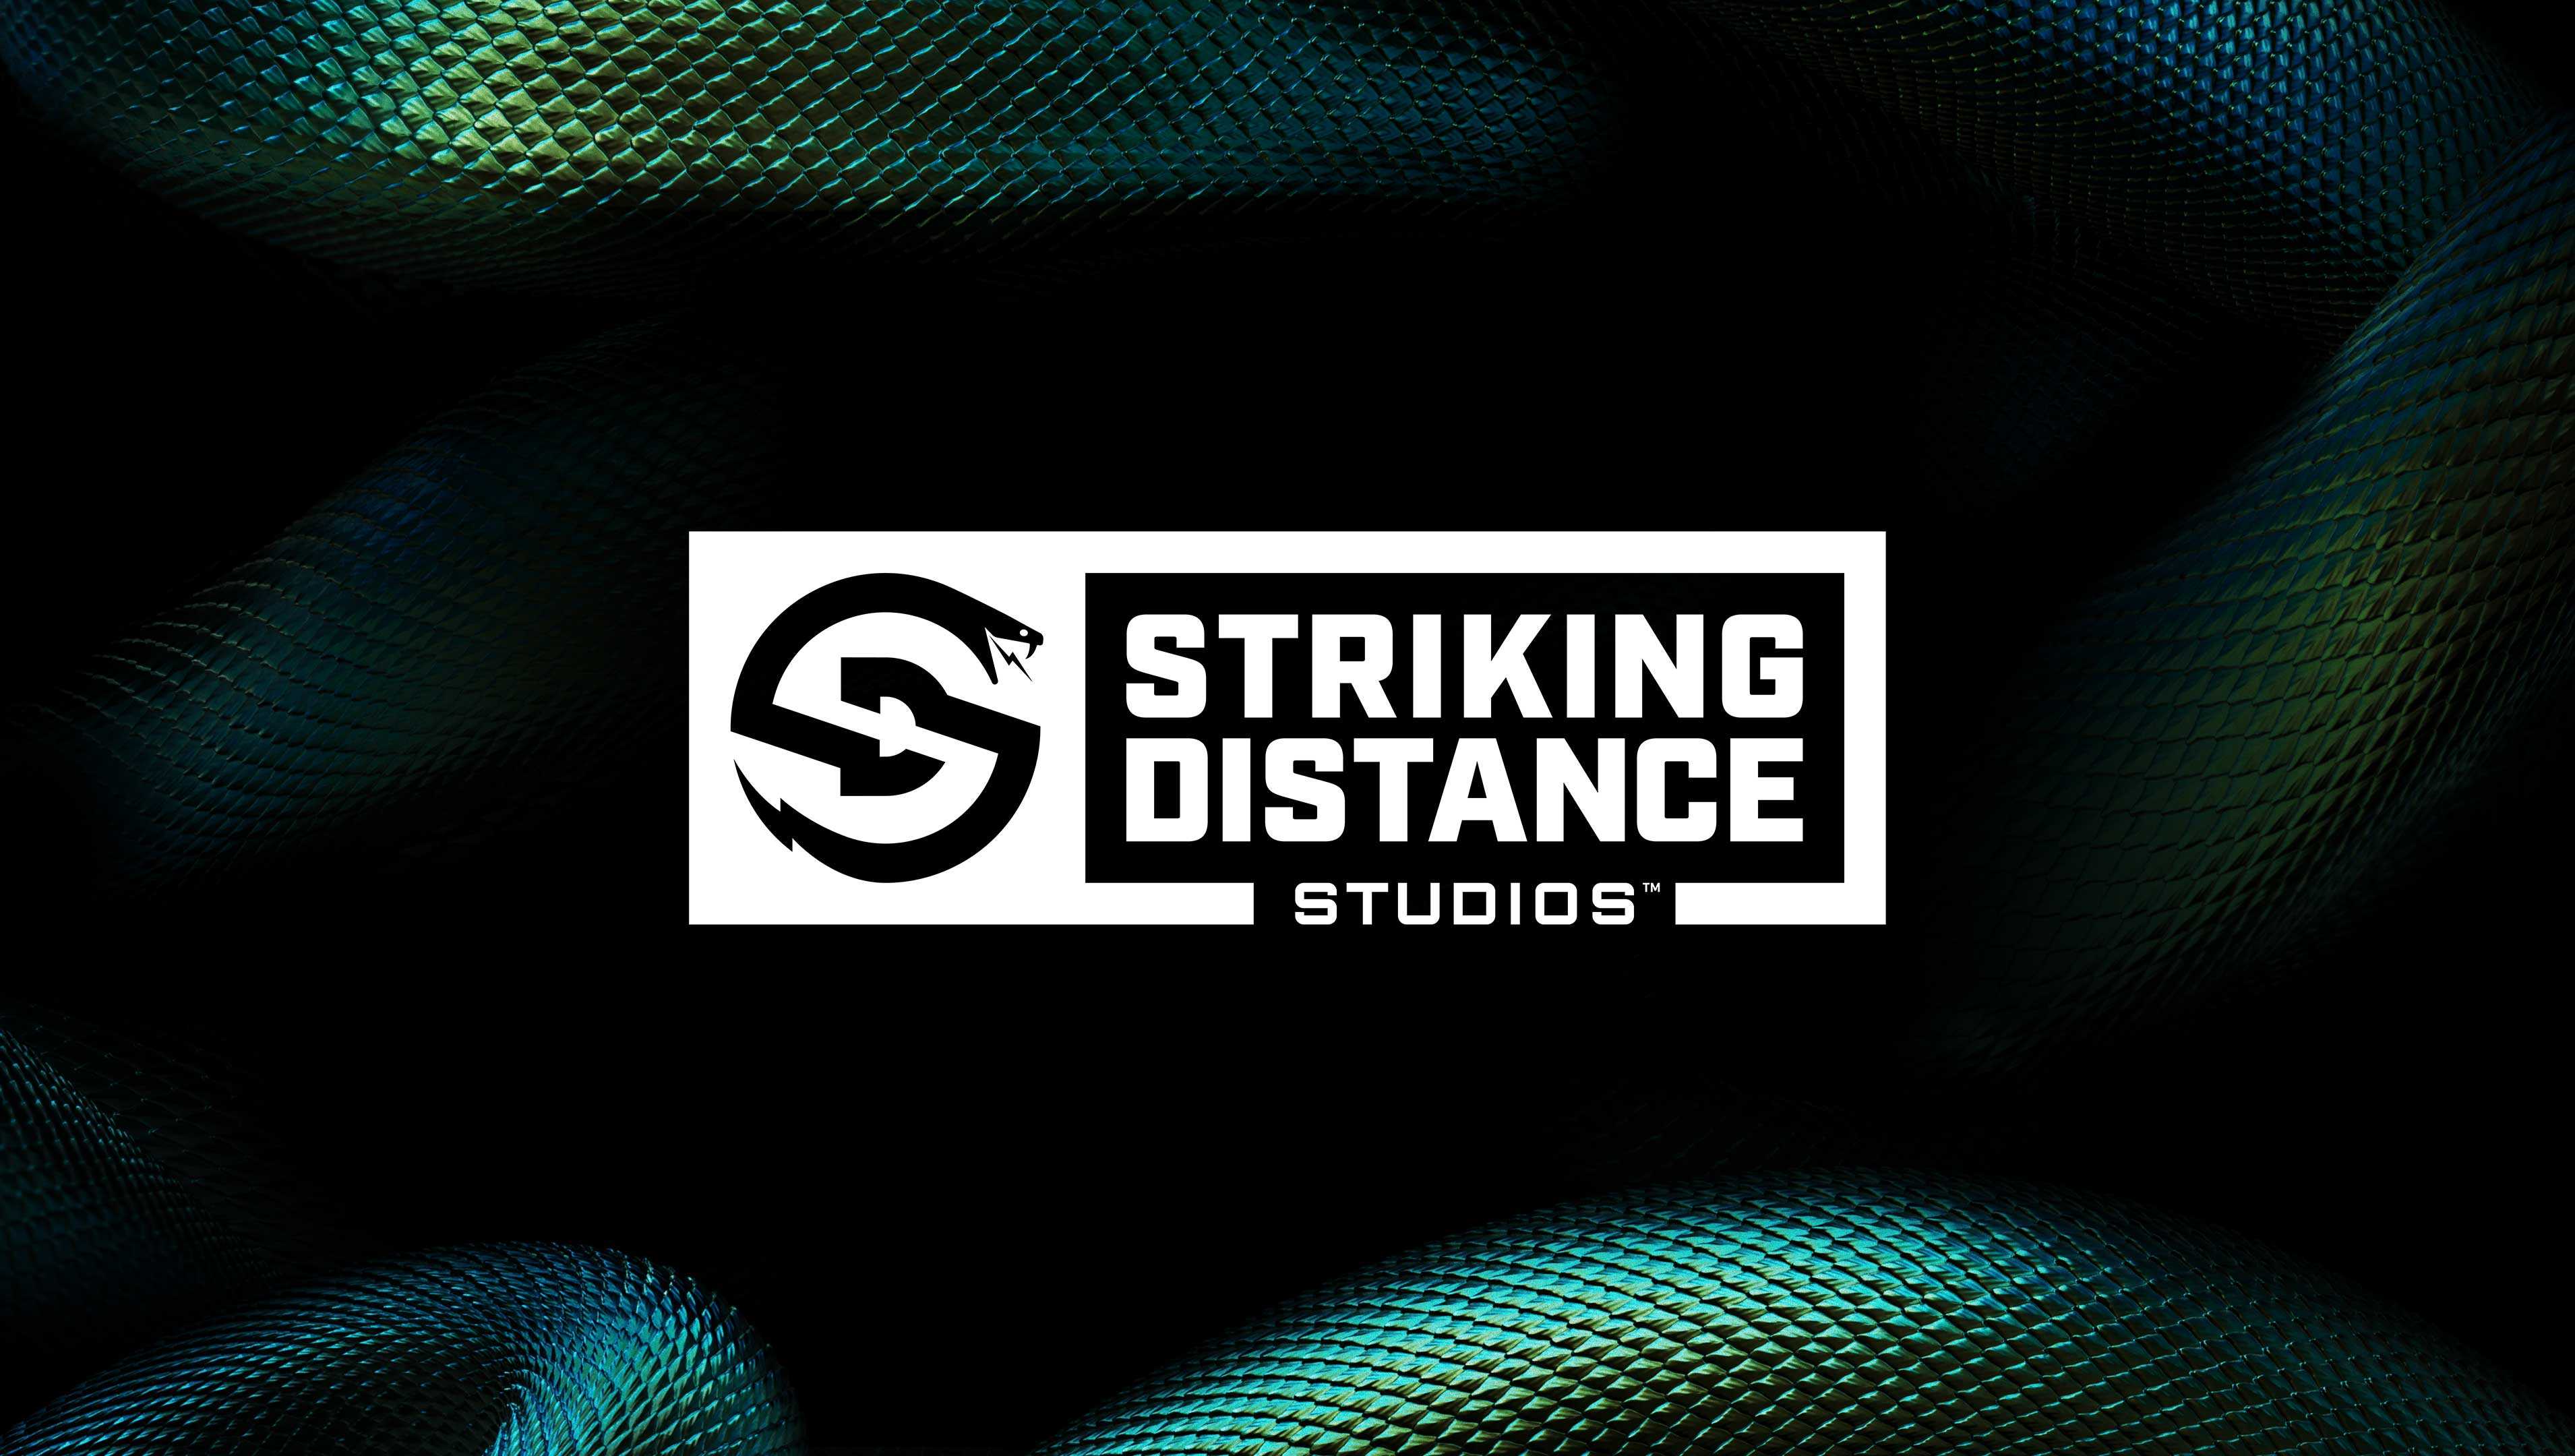 Striking Distance Studios The Callisto Protocol Wallpapers